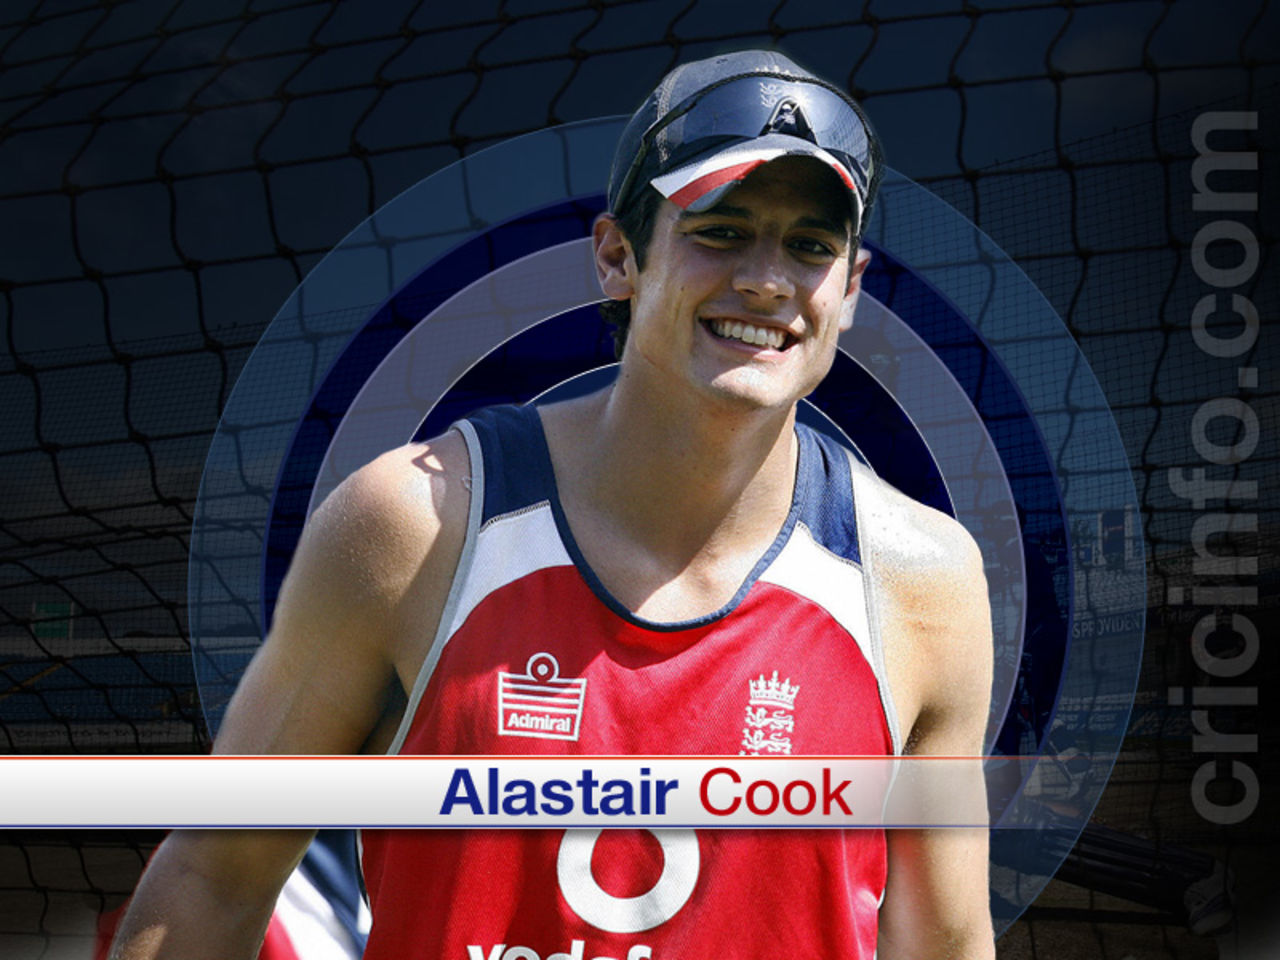 Alastair Cook